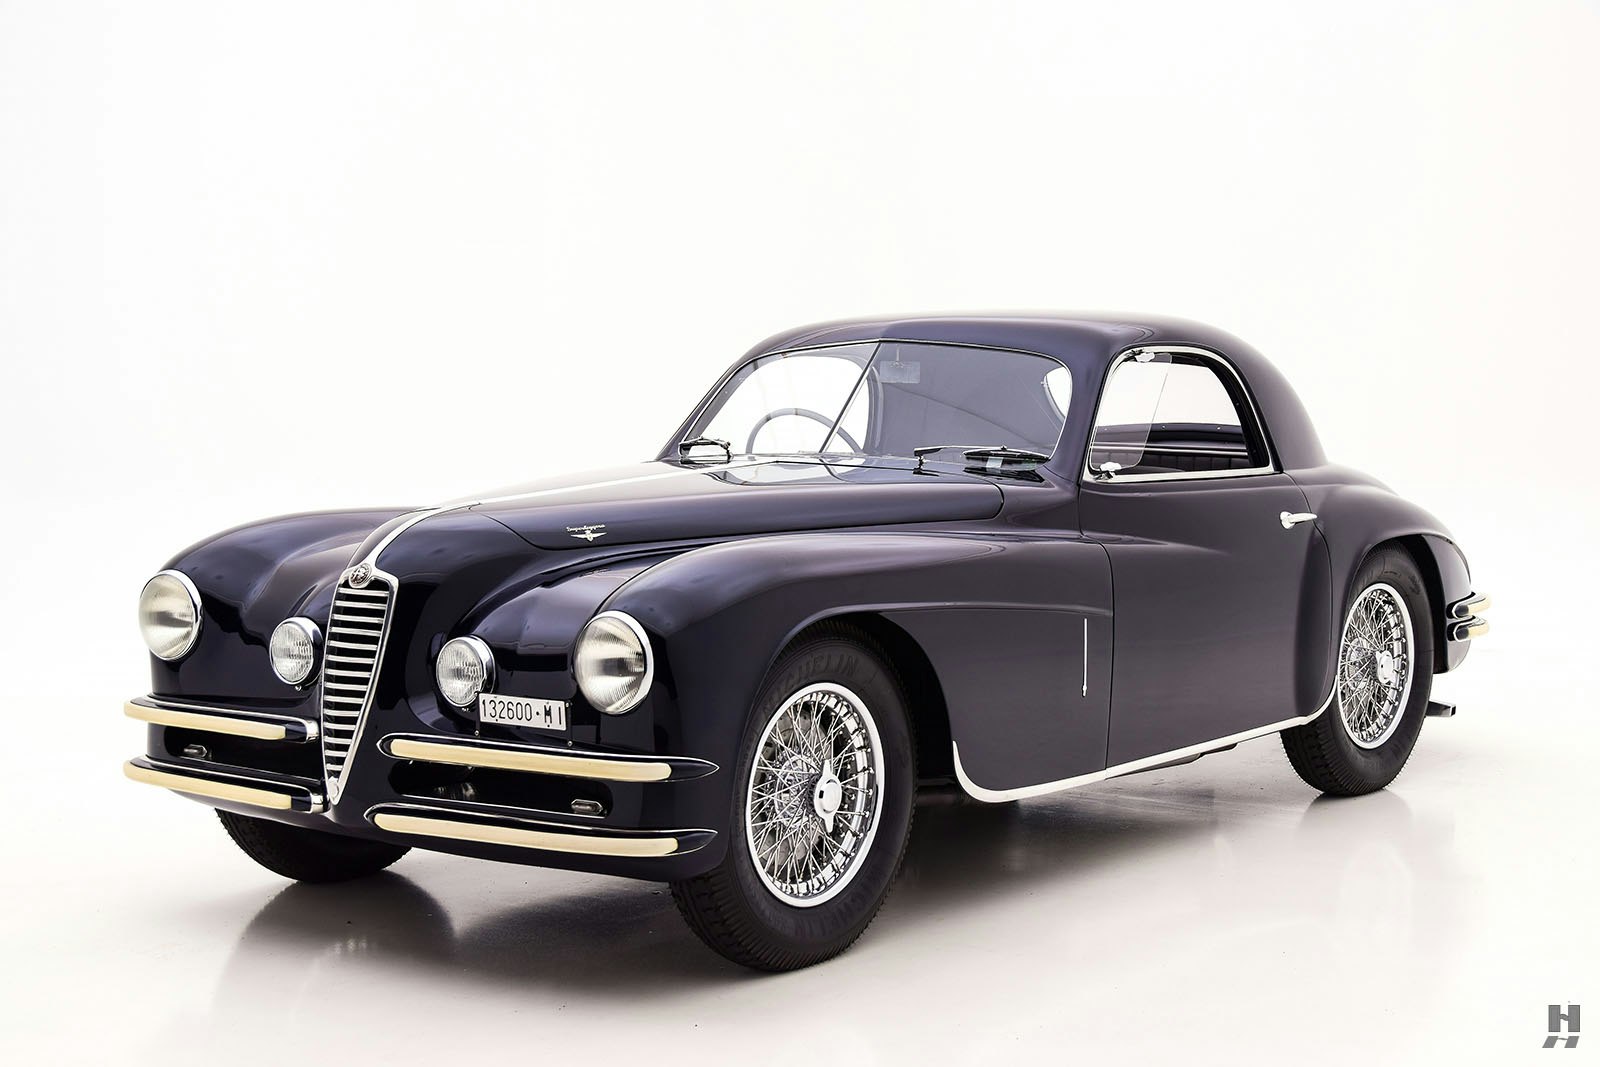 1948 Alfa Romeo 6C 2500 Super Sport 2dr Coupe by Carrozzeria Touring, Courtesy of Hyman Ltd.